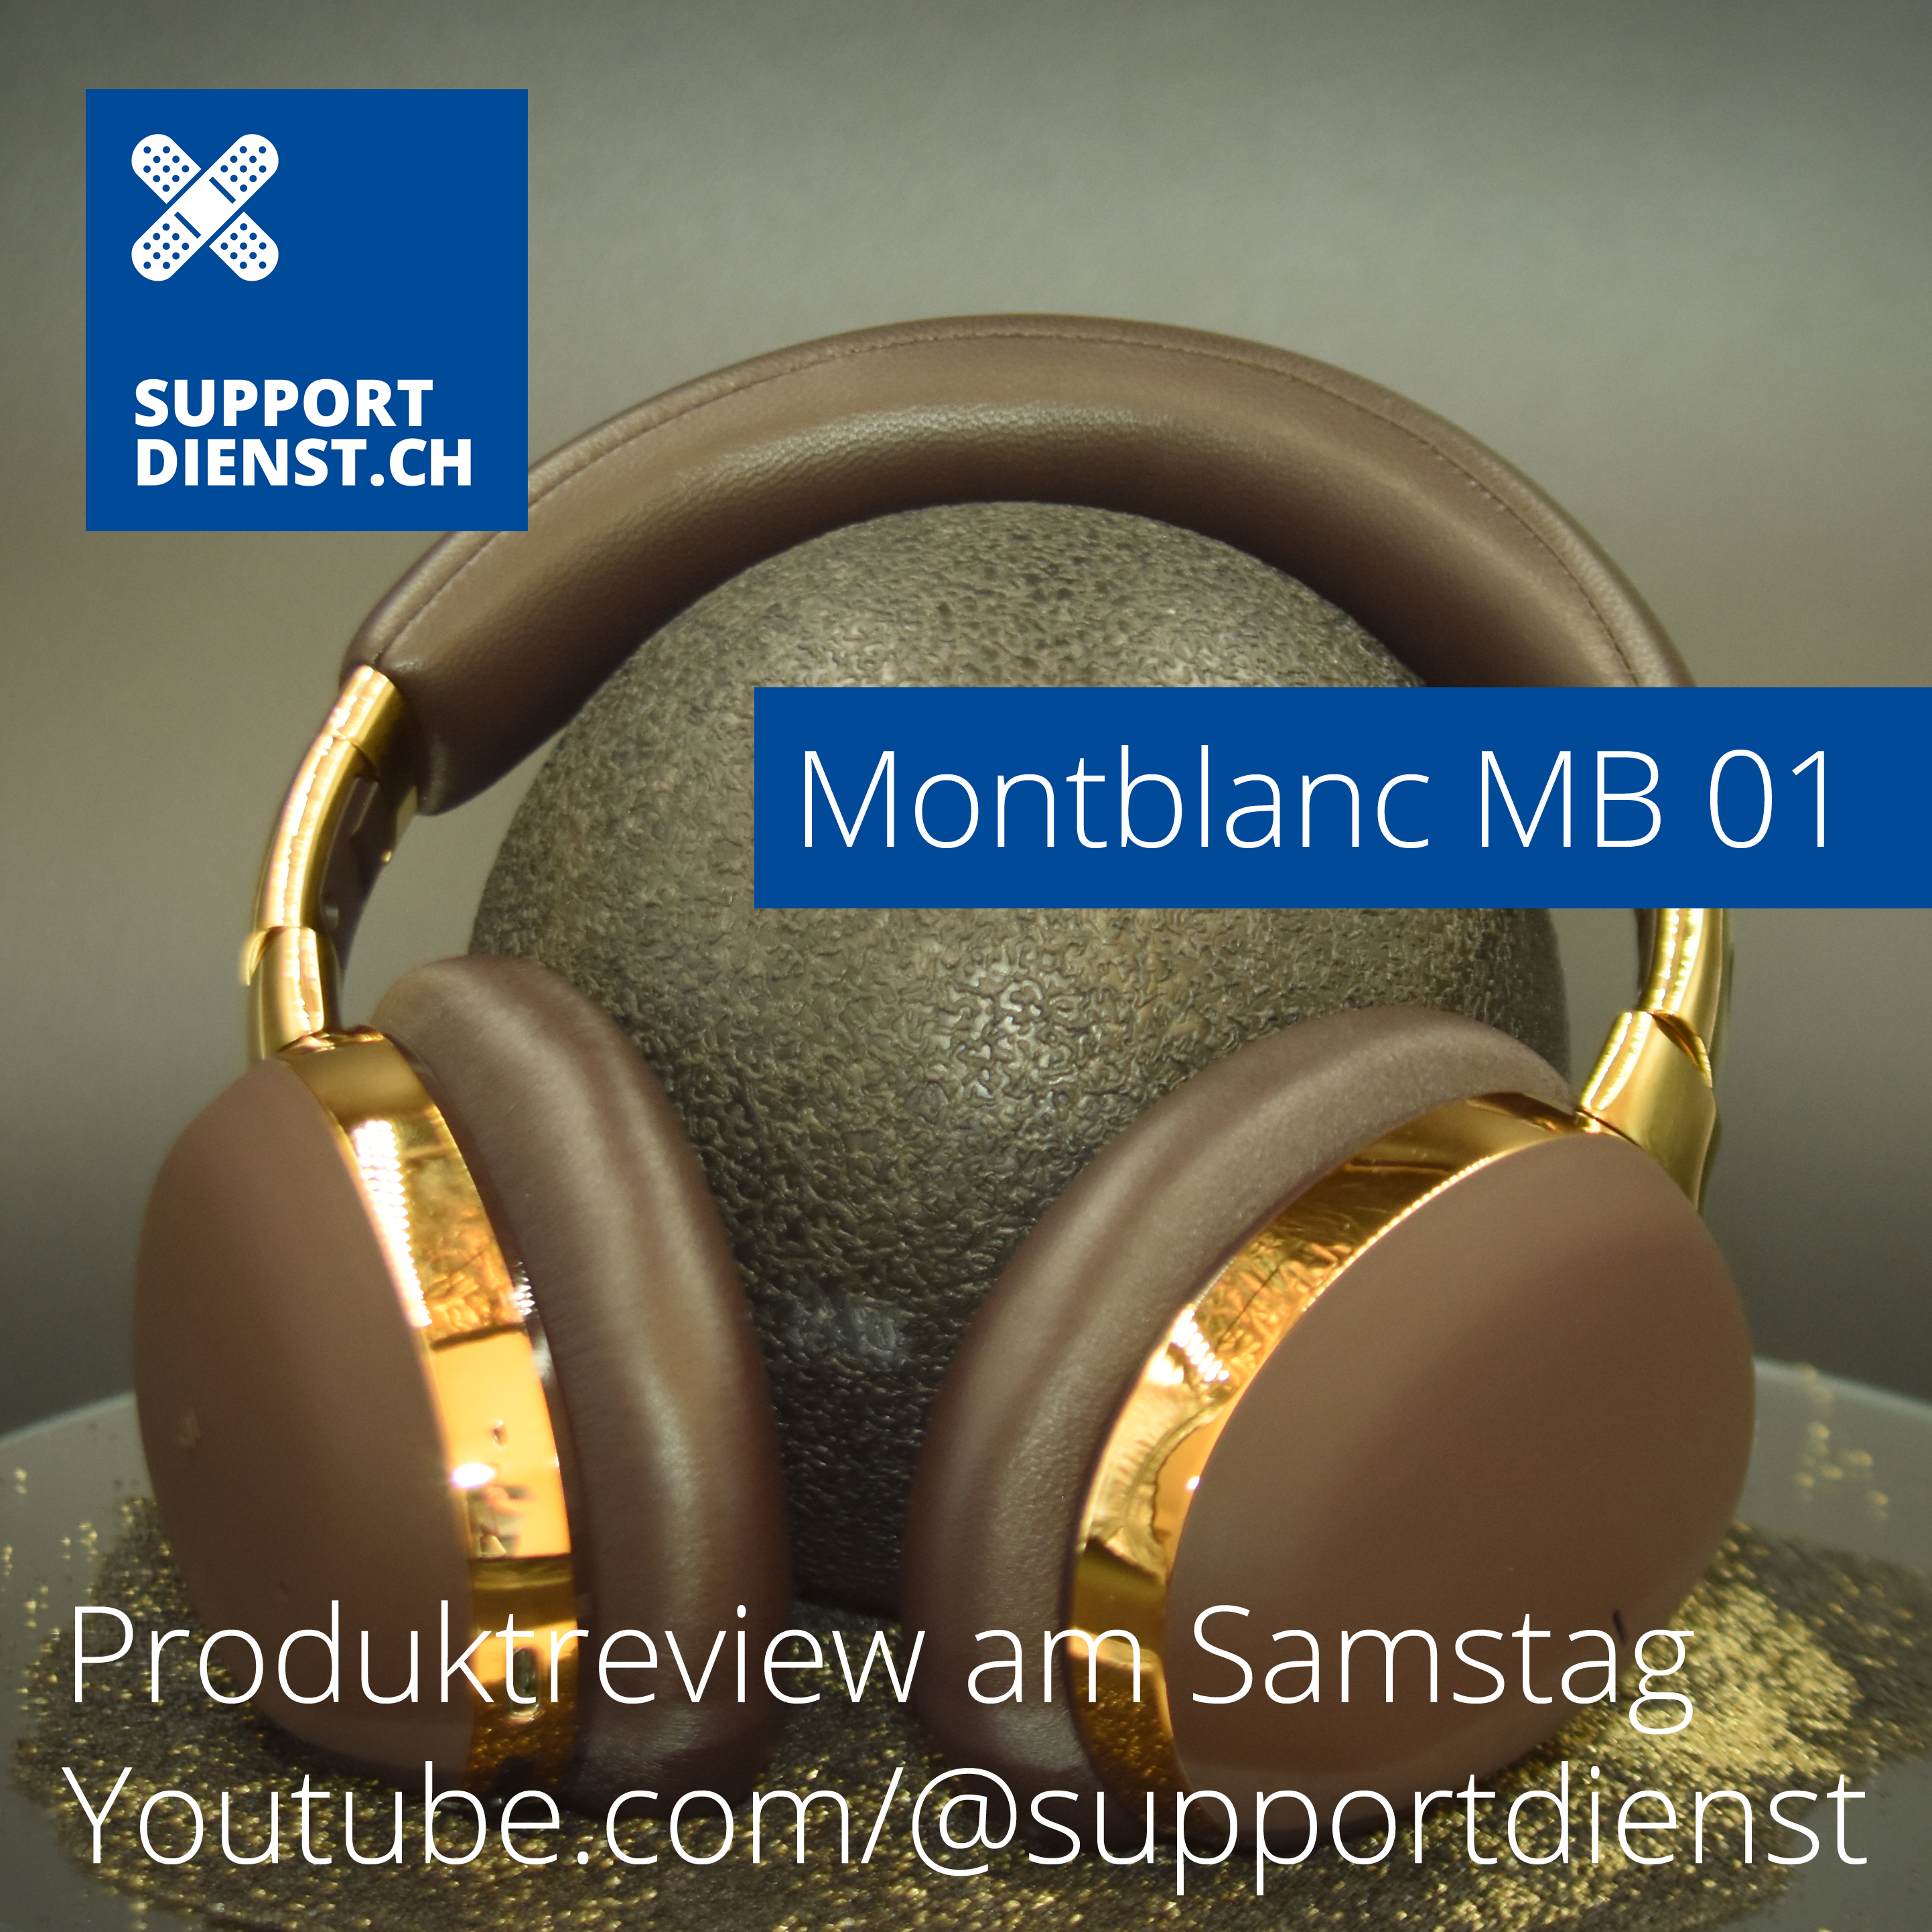 Montblanc MB 01 KopfhÃ¶rer Produktreview ðŸ¤µ